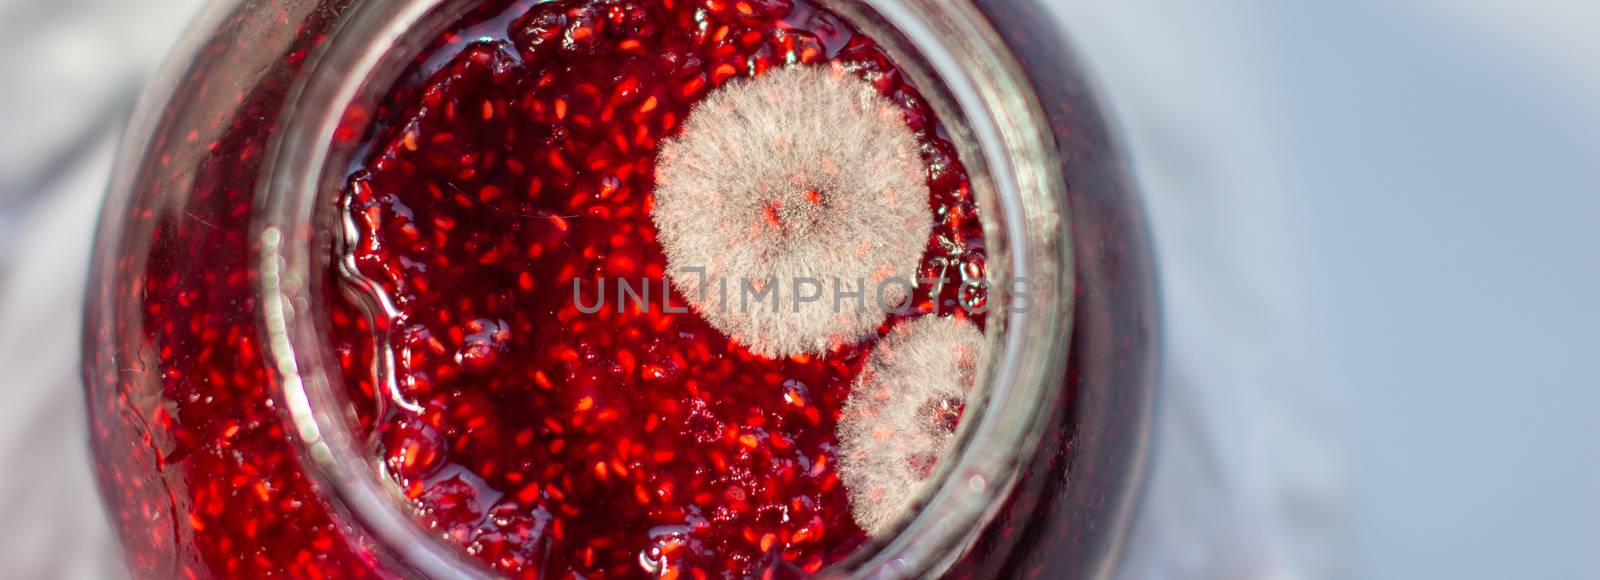 Mold in a jar of raspberry jam. Hazardous to health.  by AnatoliiFoto